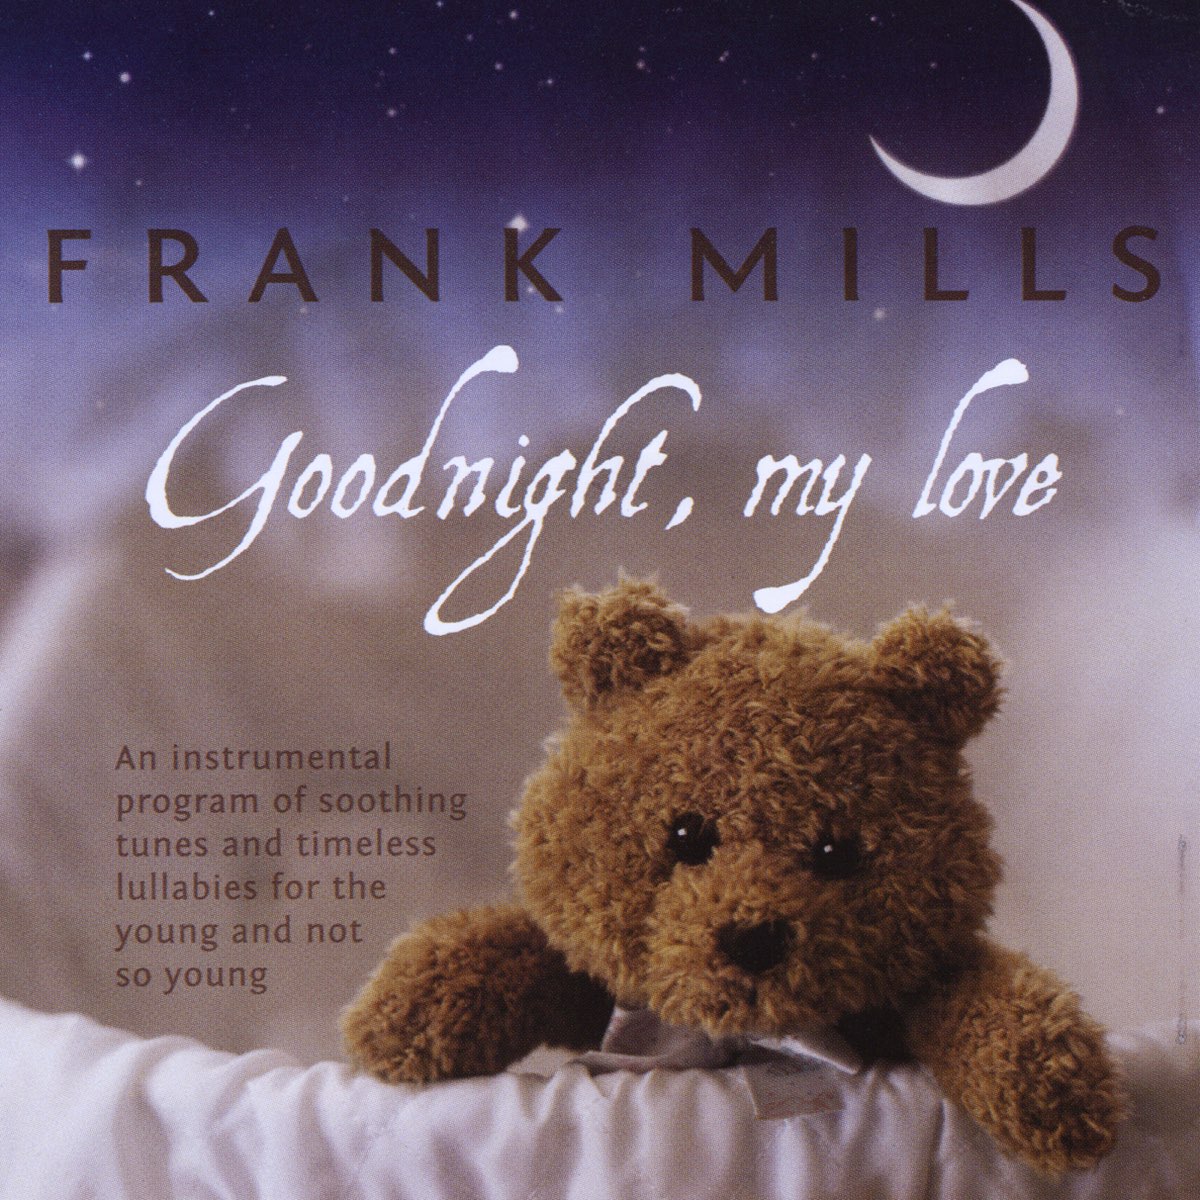 Goodnight, My Love - Album by Frank Mills - Apple Music